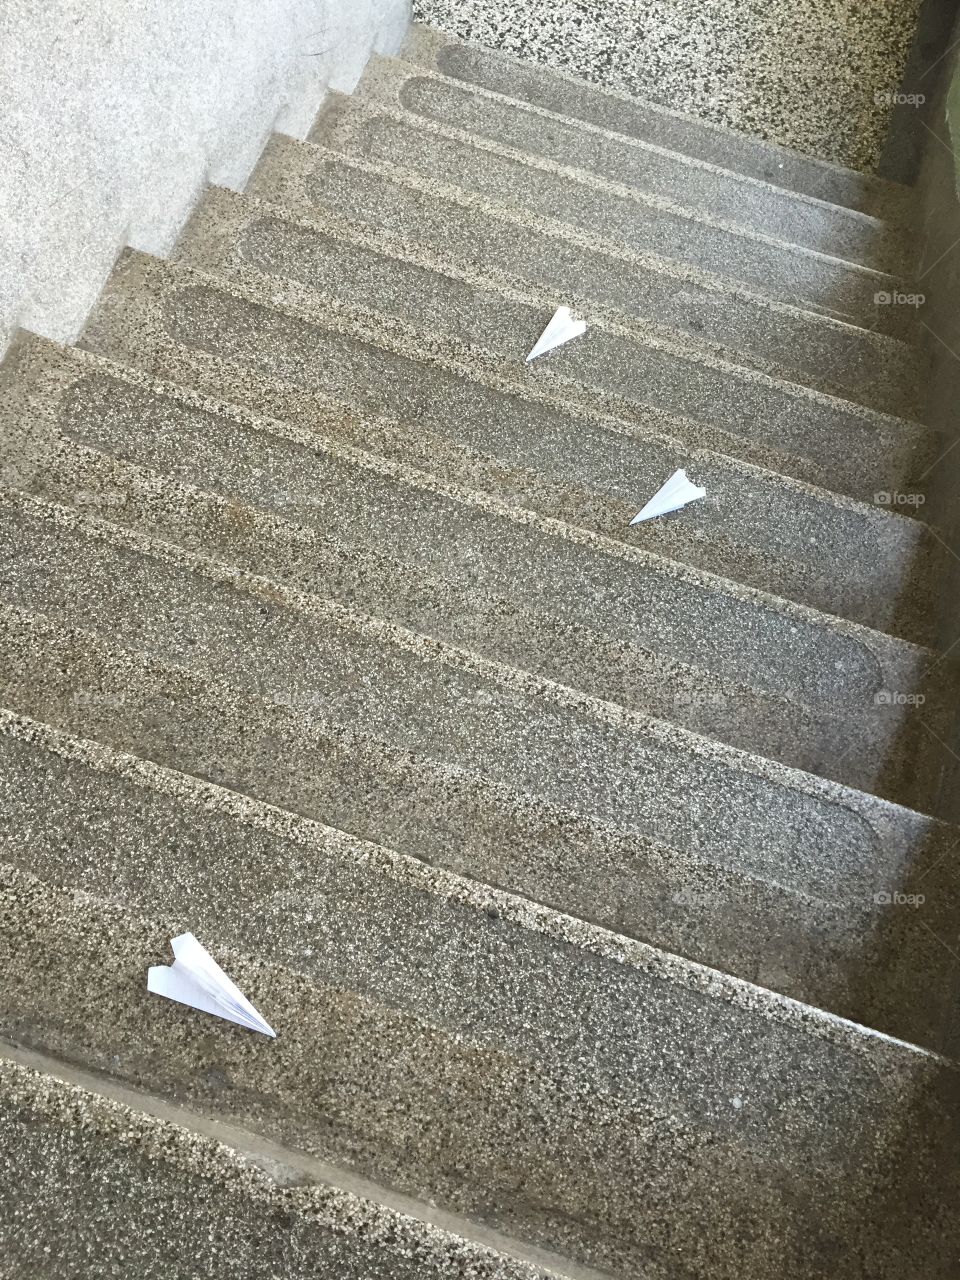 School stairs